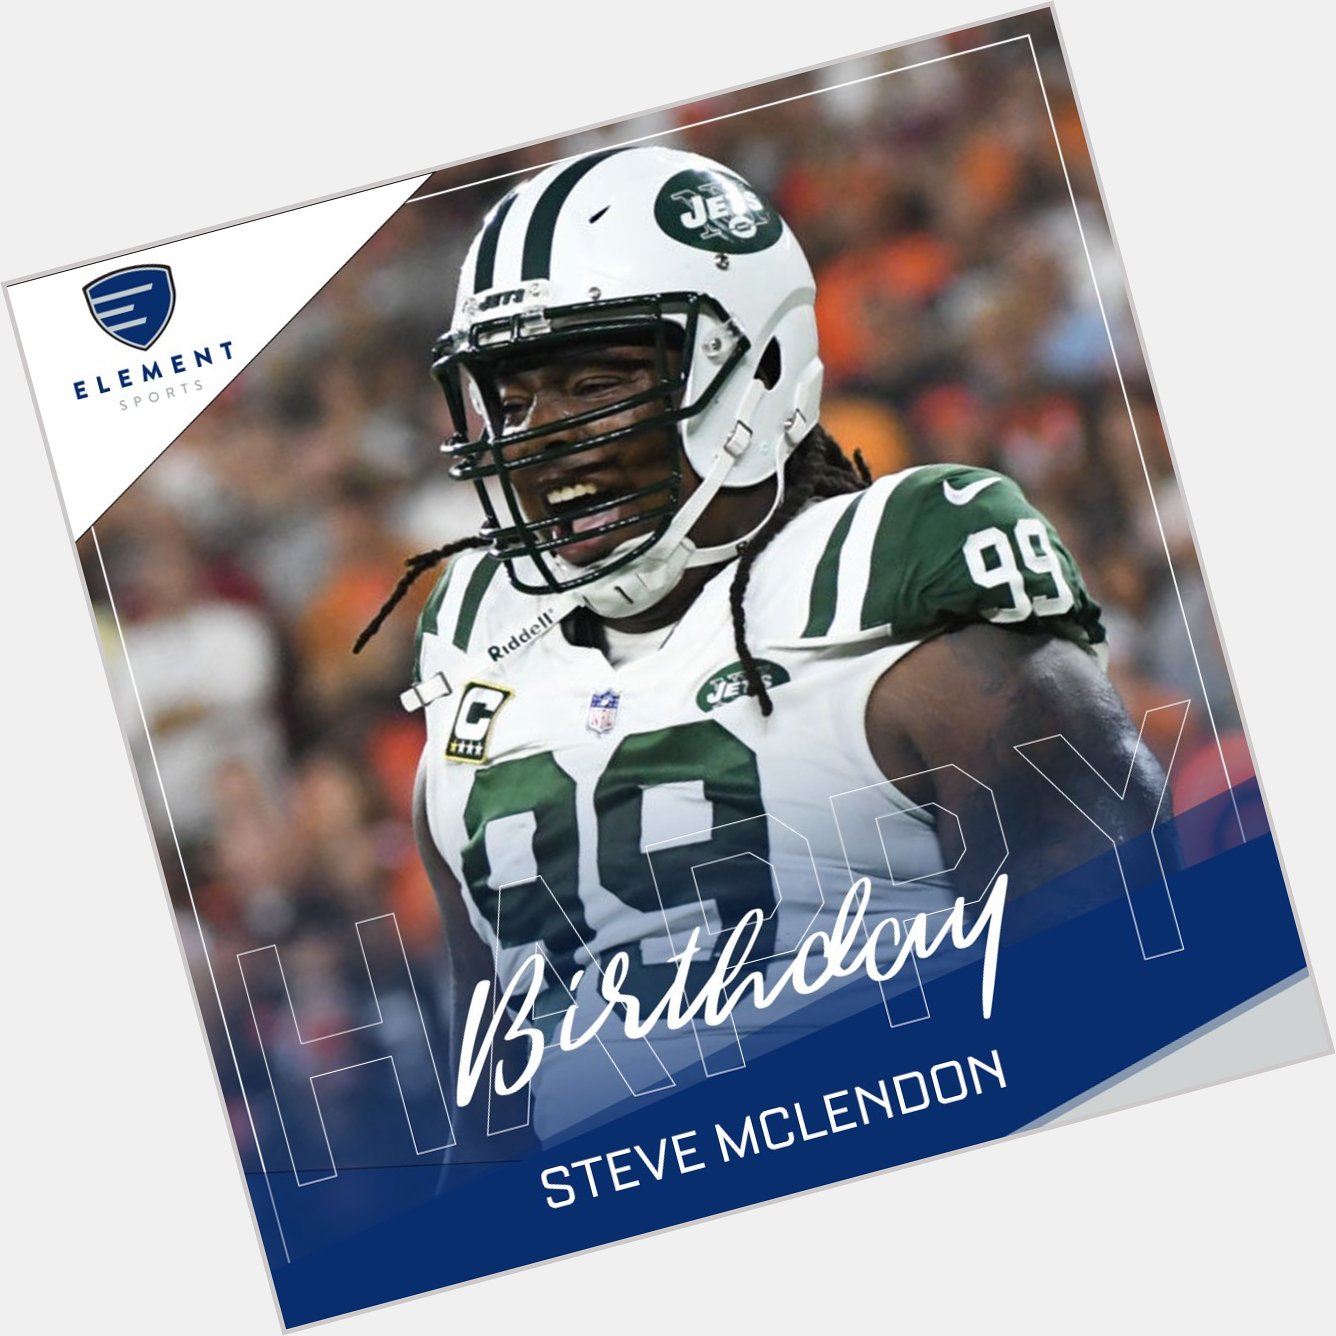 Wishing a very happy birthday to the man, Steve McLendon! We hope you enjoy it  